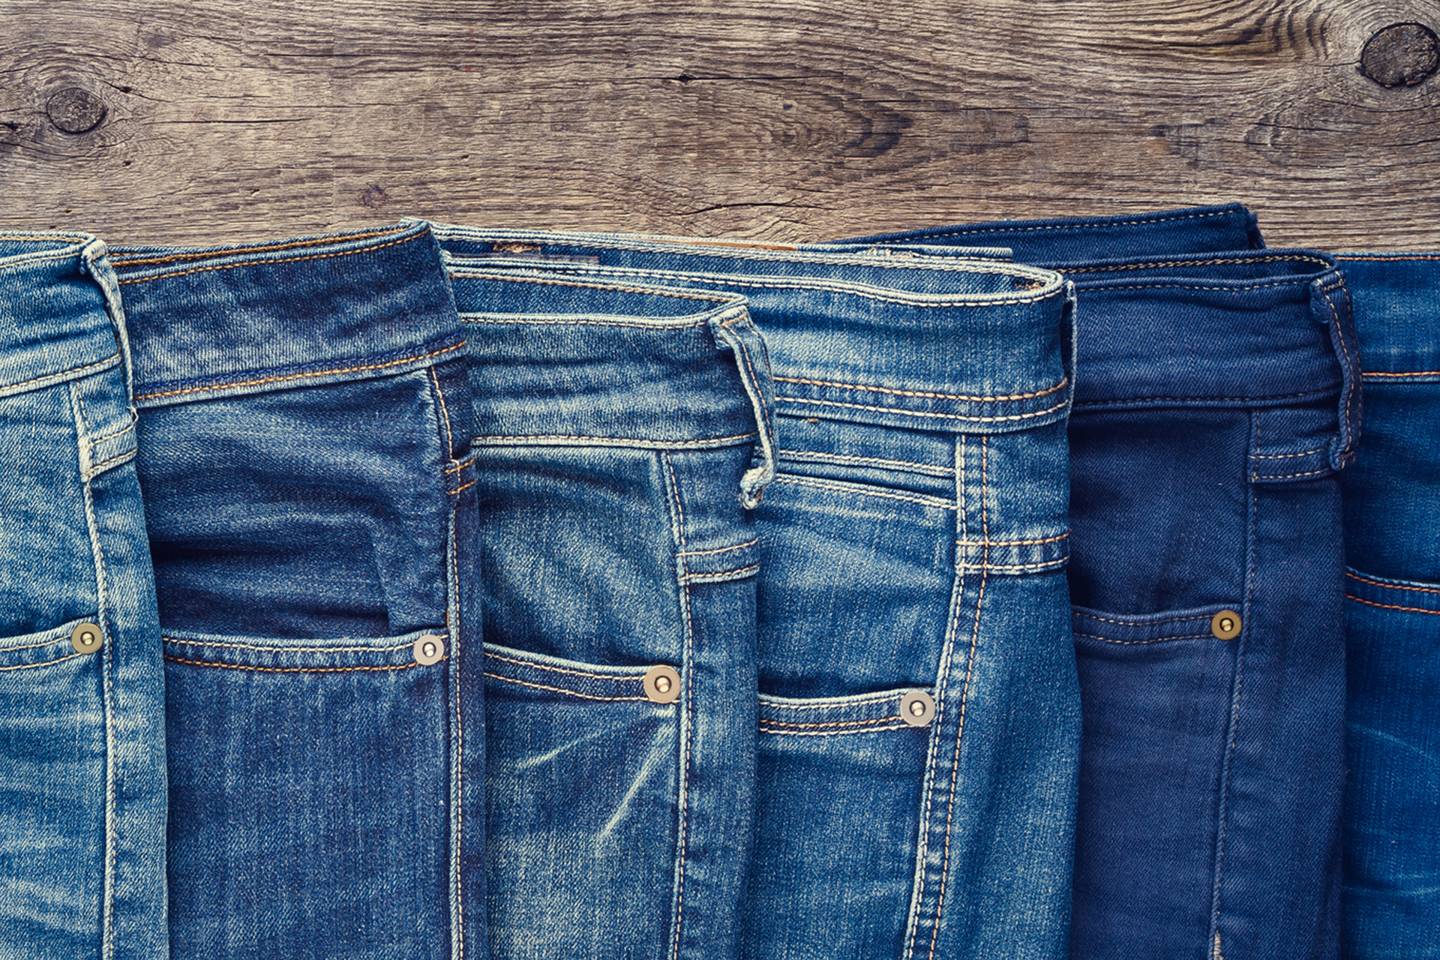 Jeans Design фото в формате jpeg, фотографии опубликовал админ фото стока